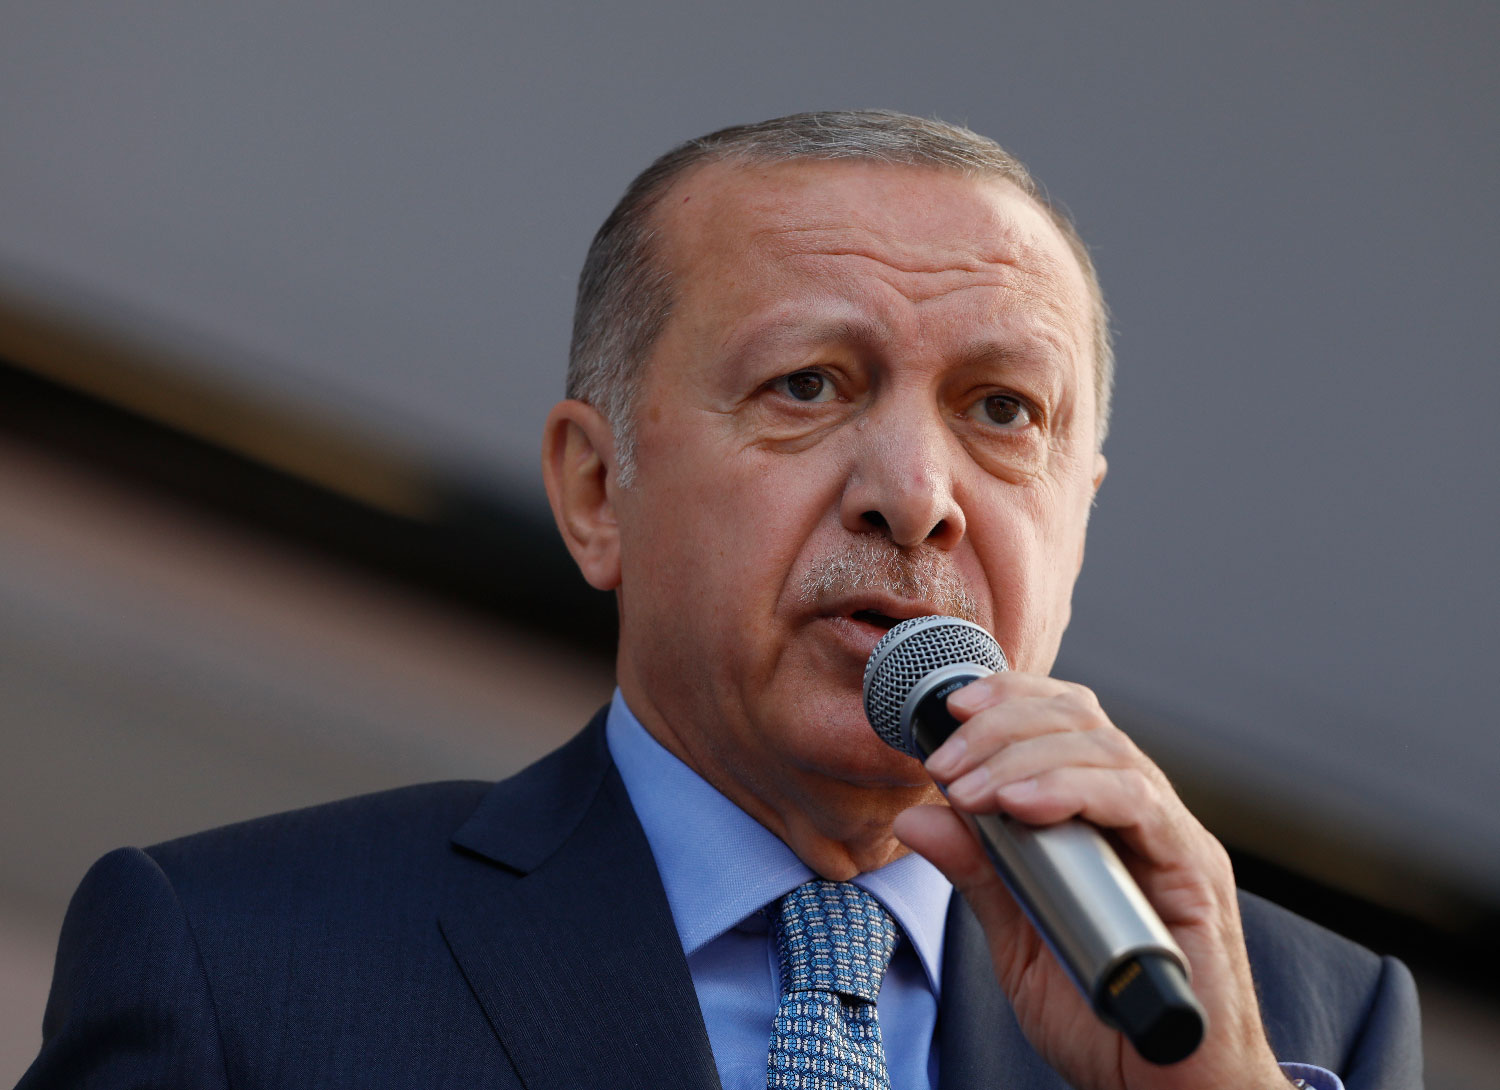 Turkey's president Recep Tayyip Erdogan